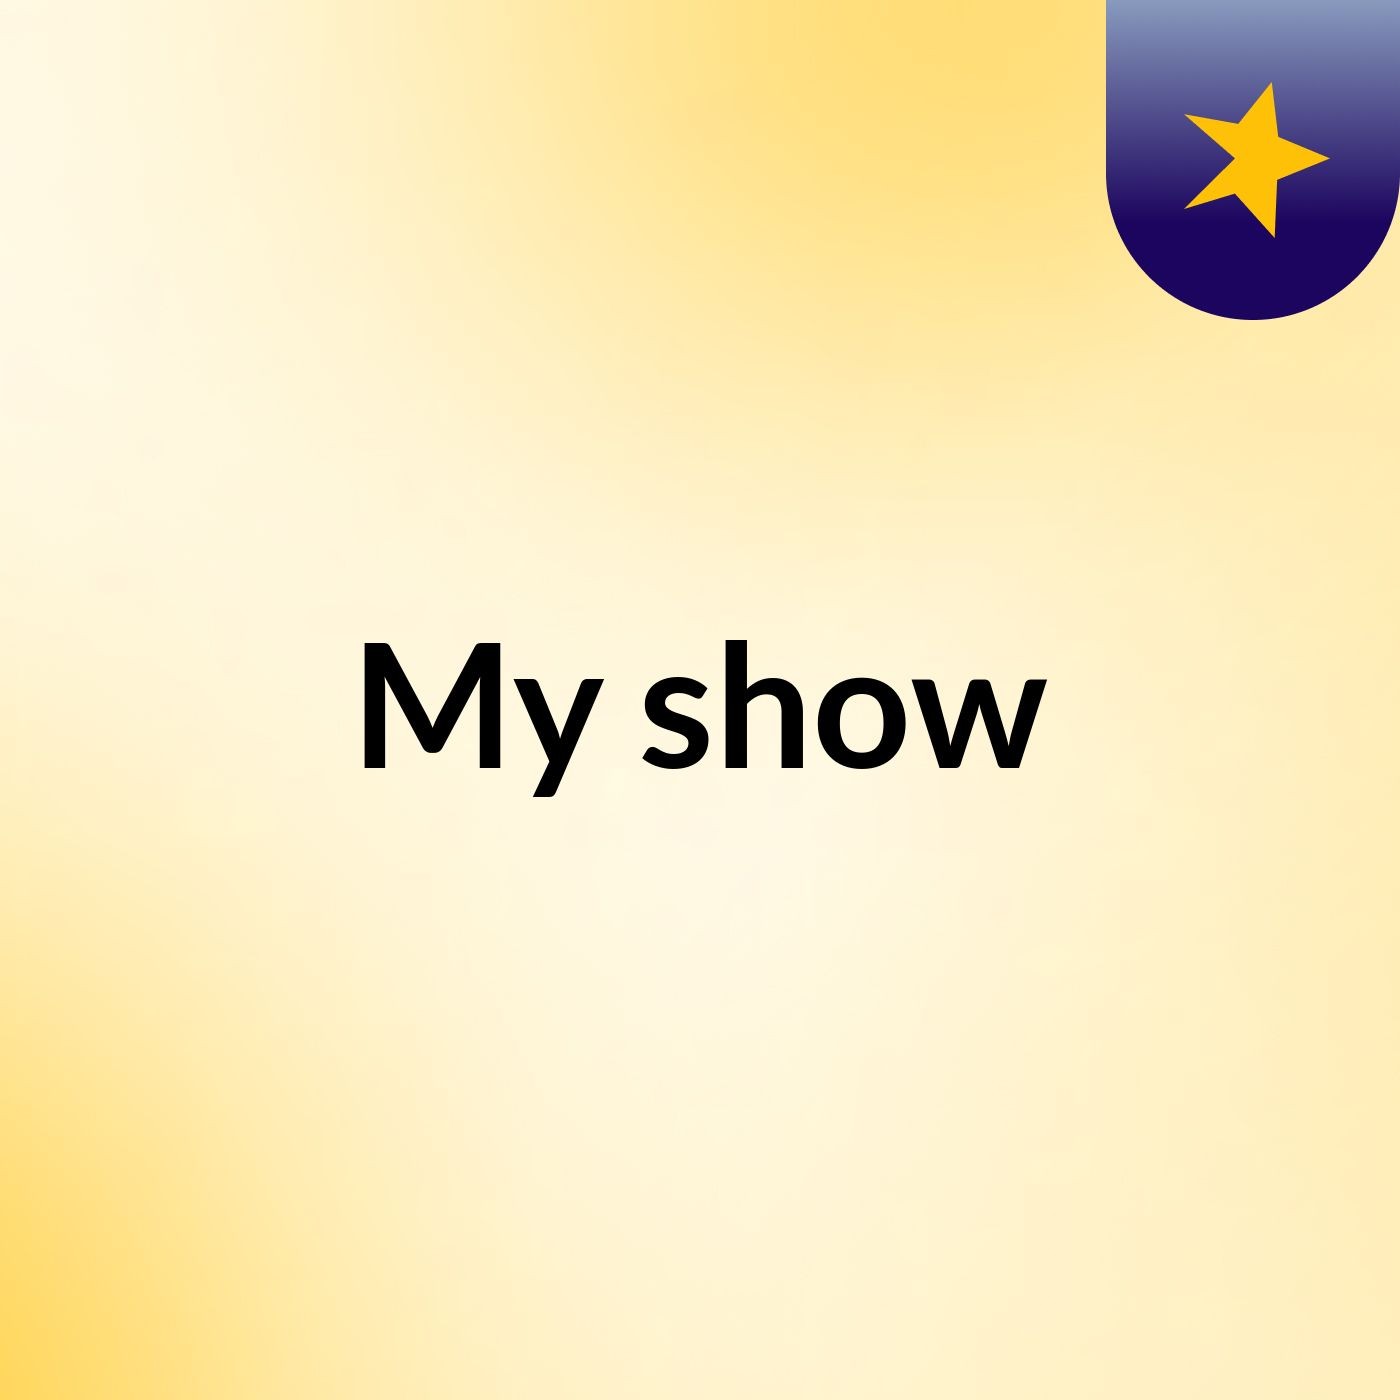 My show